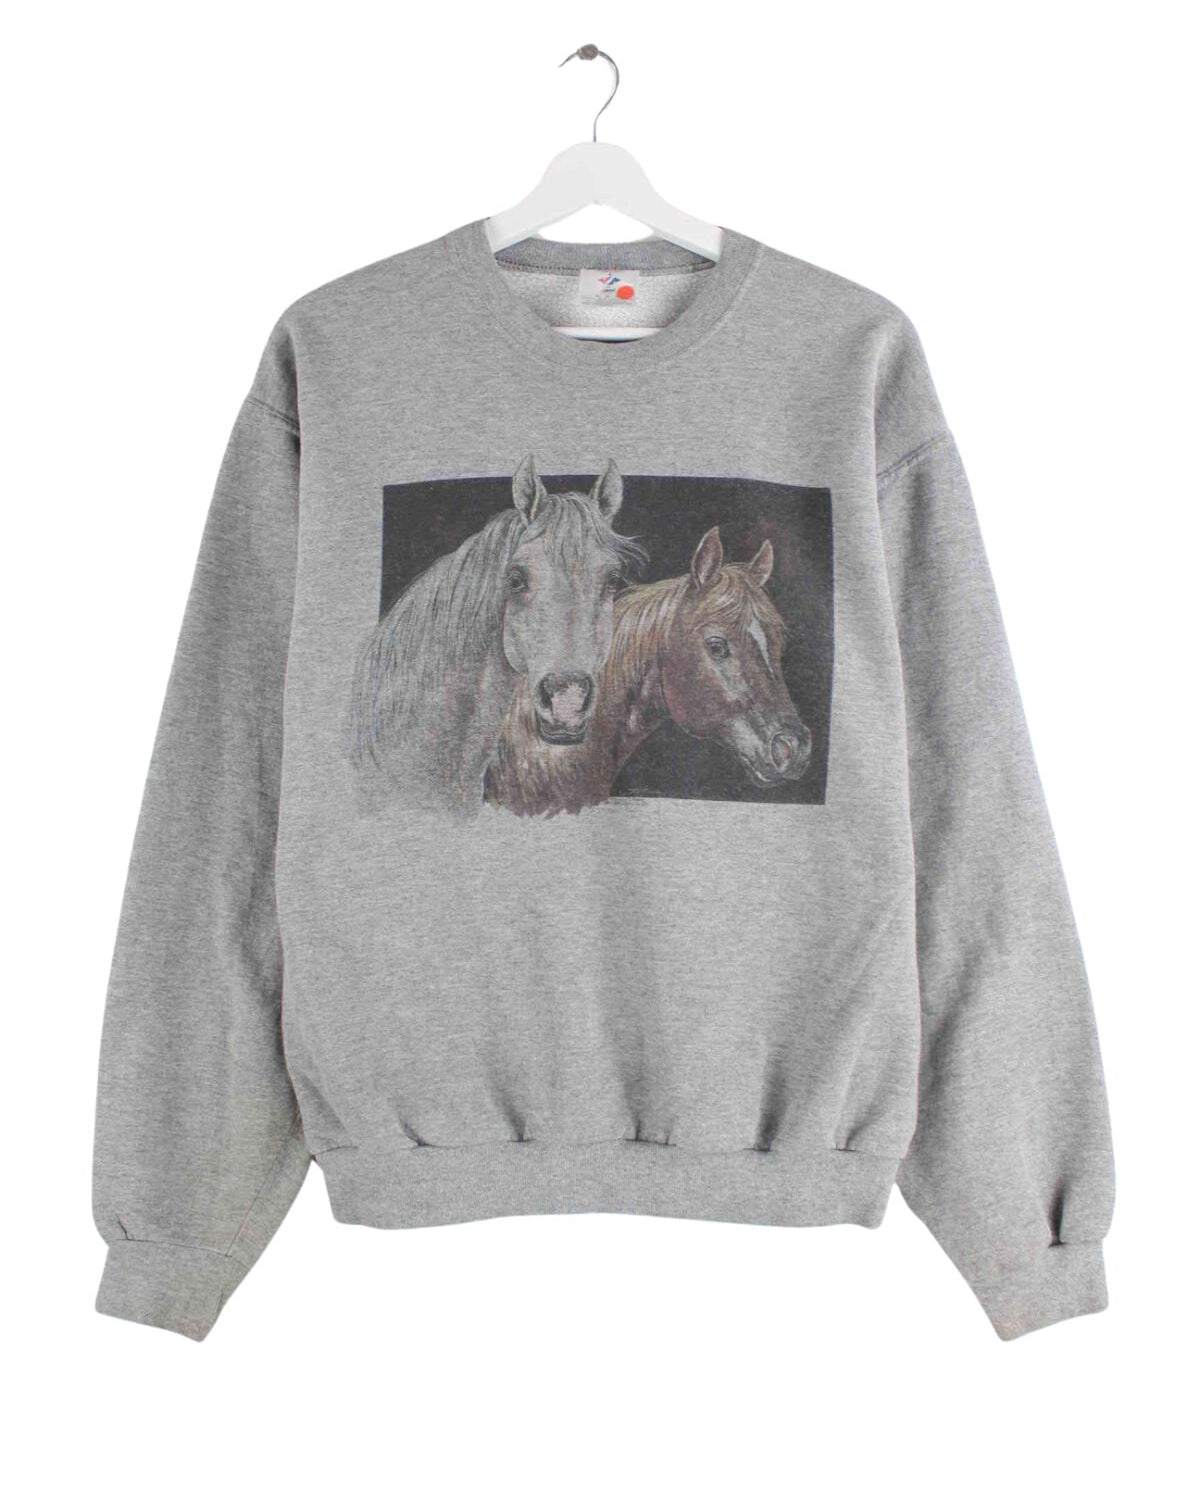 Jerzees Damen Horse Print Sweater Grau M (front image)